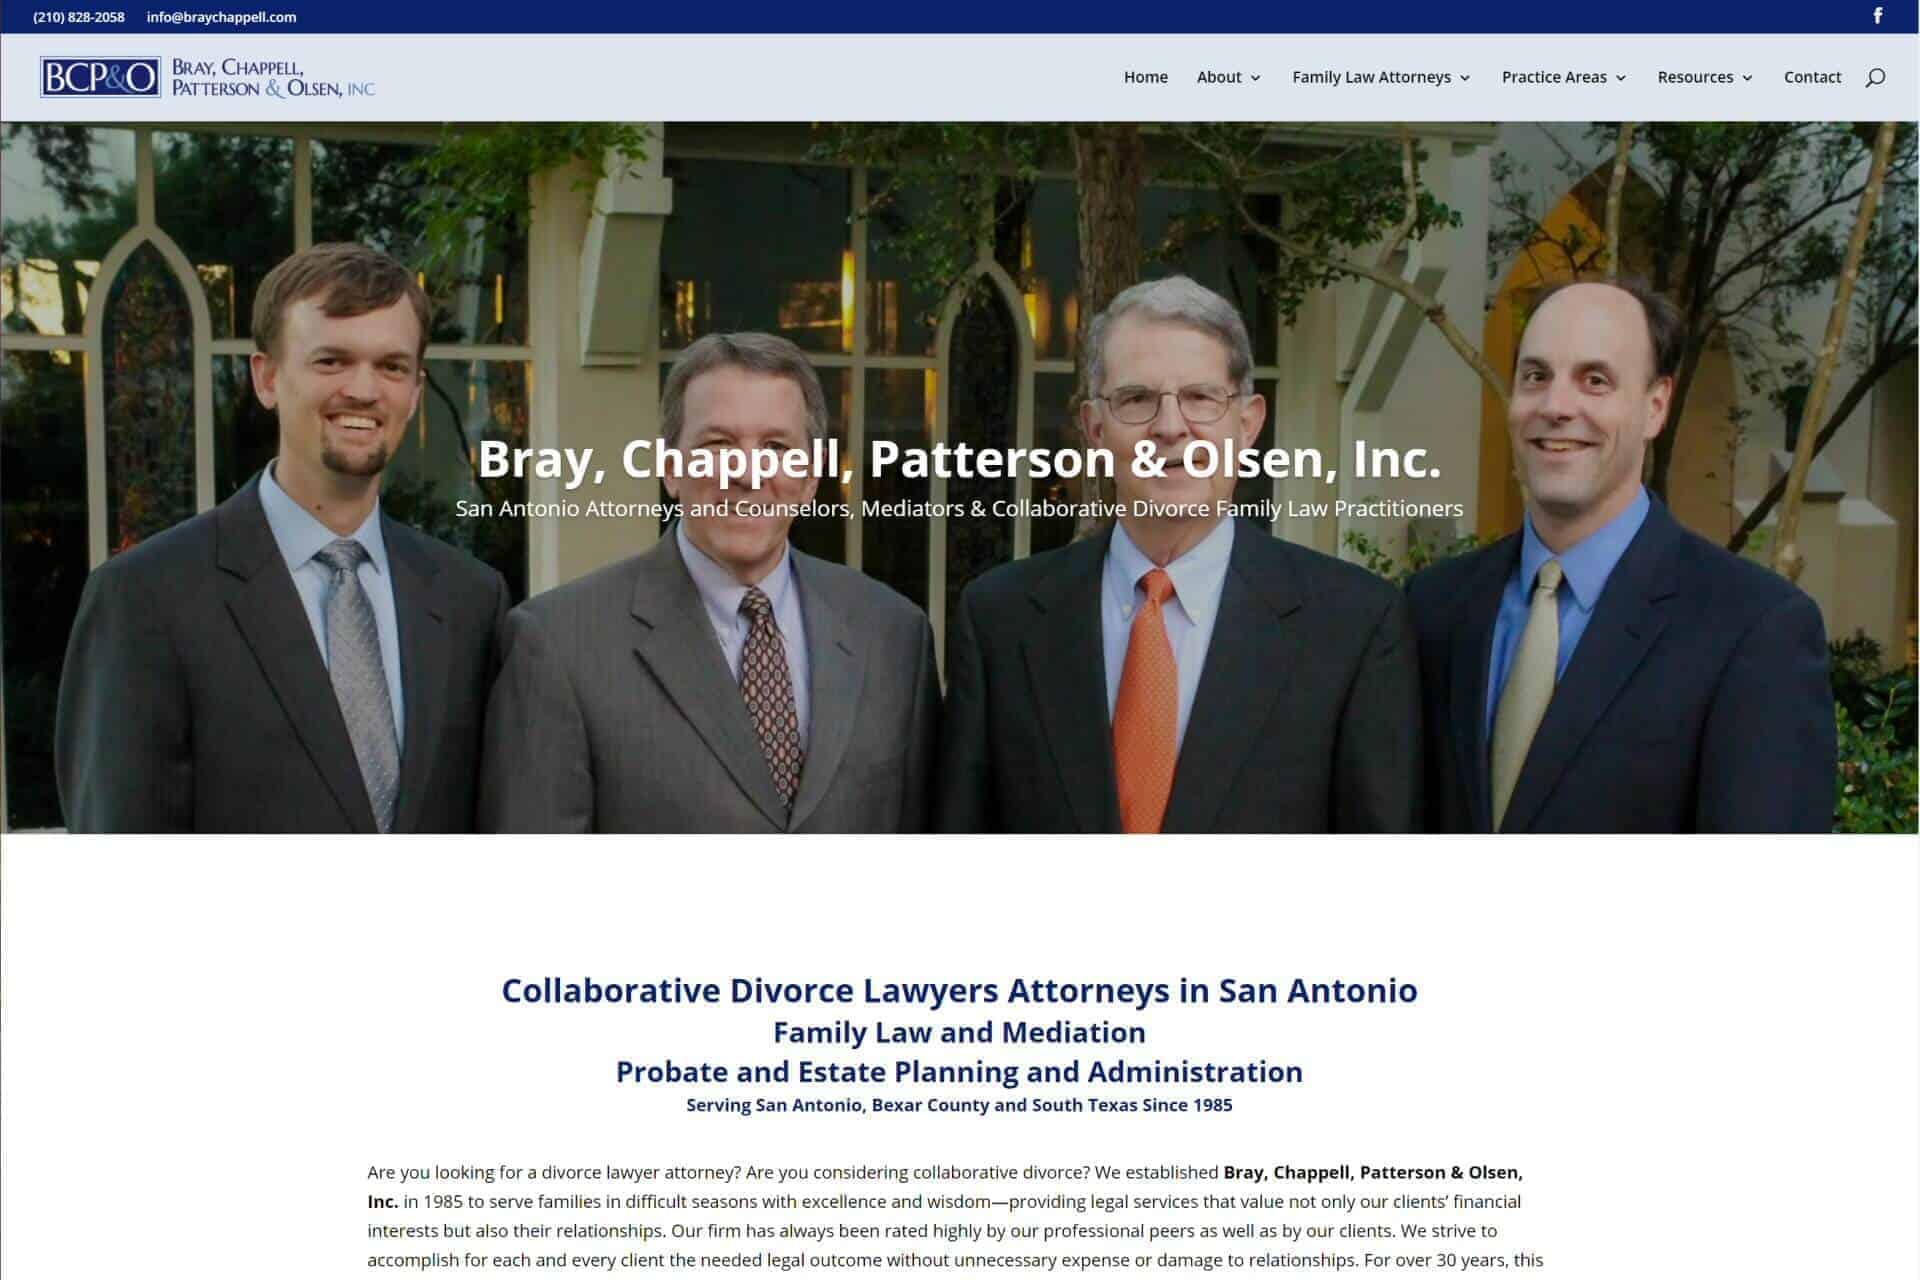 Bray, Chappell, Patterson & Olsen, Inc. by Nancy Tutors - Austin Private Elementary School Tutor